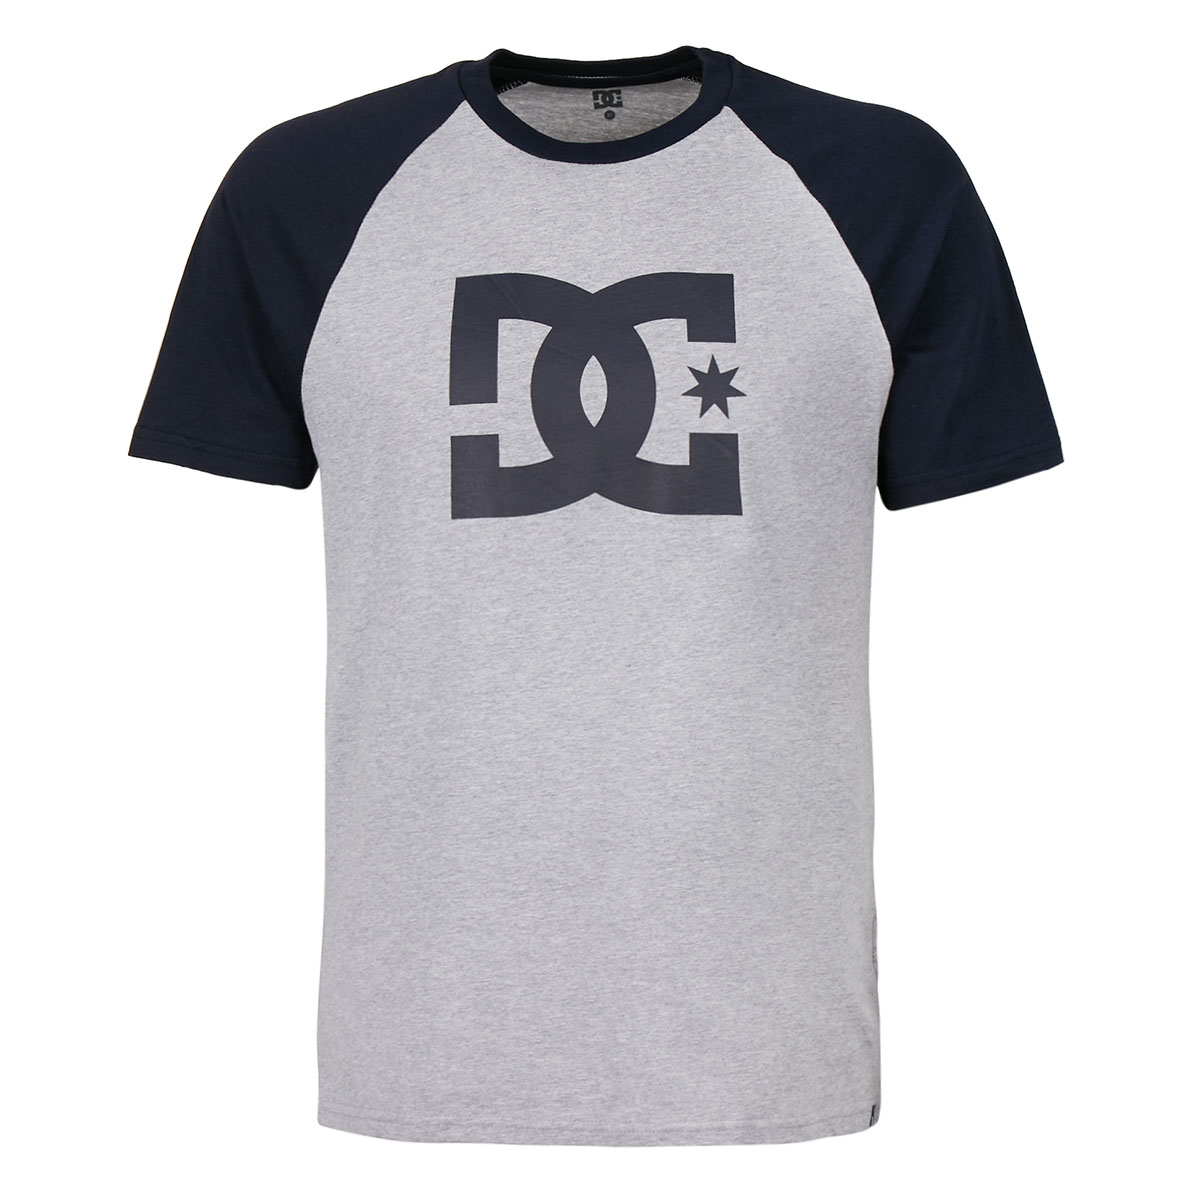 DC T-Shirt Star Raglan Grau meliert